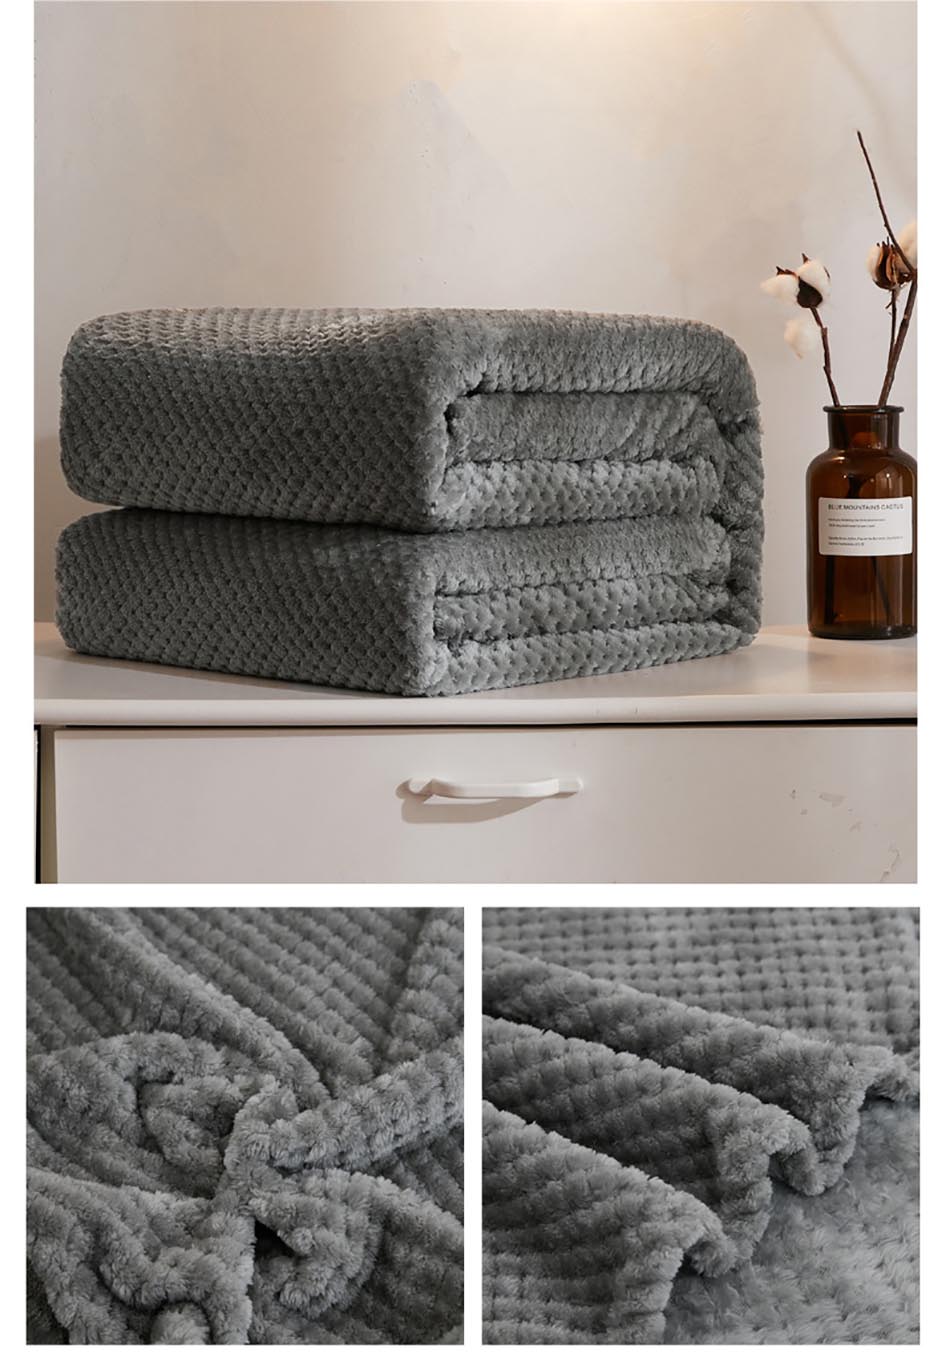 Blanket for Bed: Fluffy Plaid